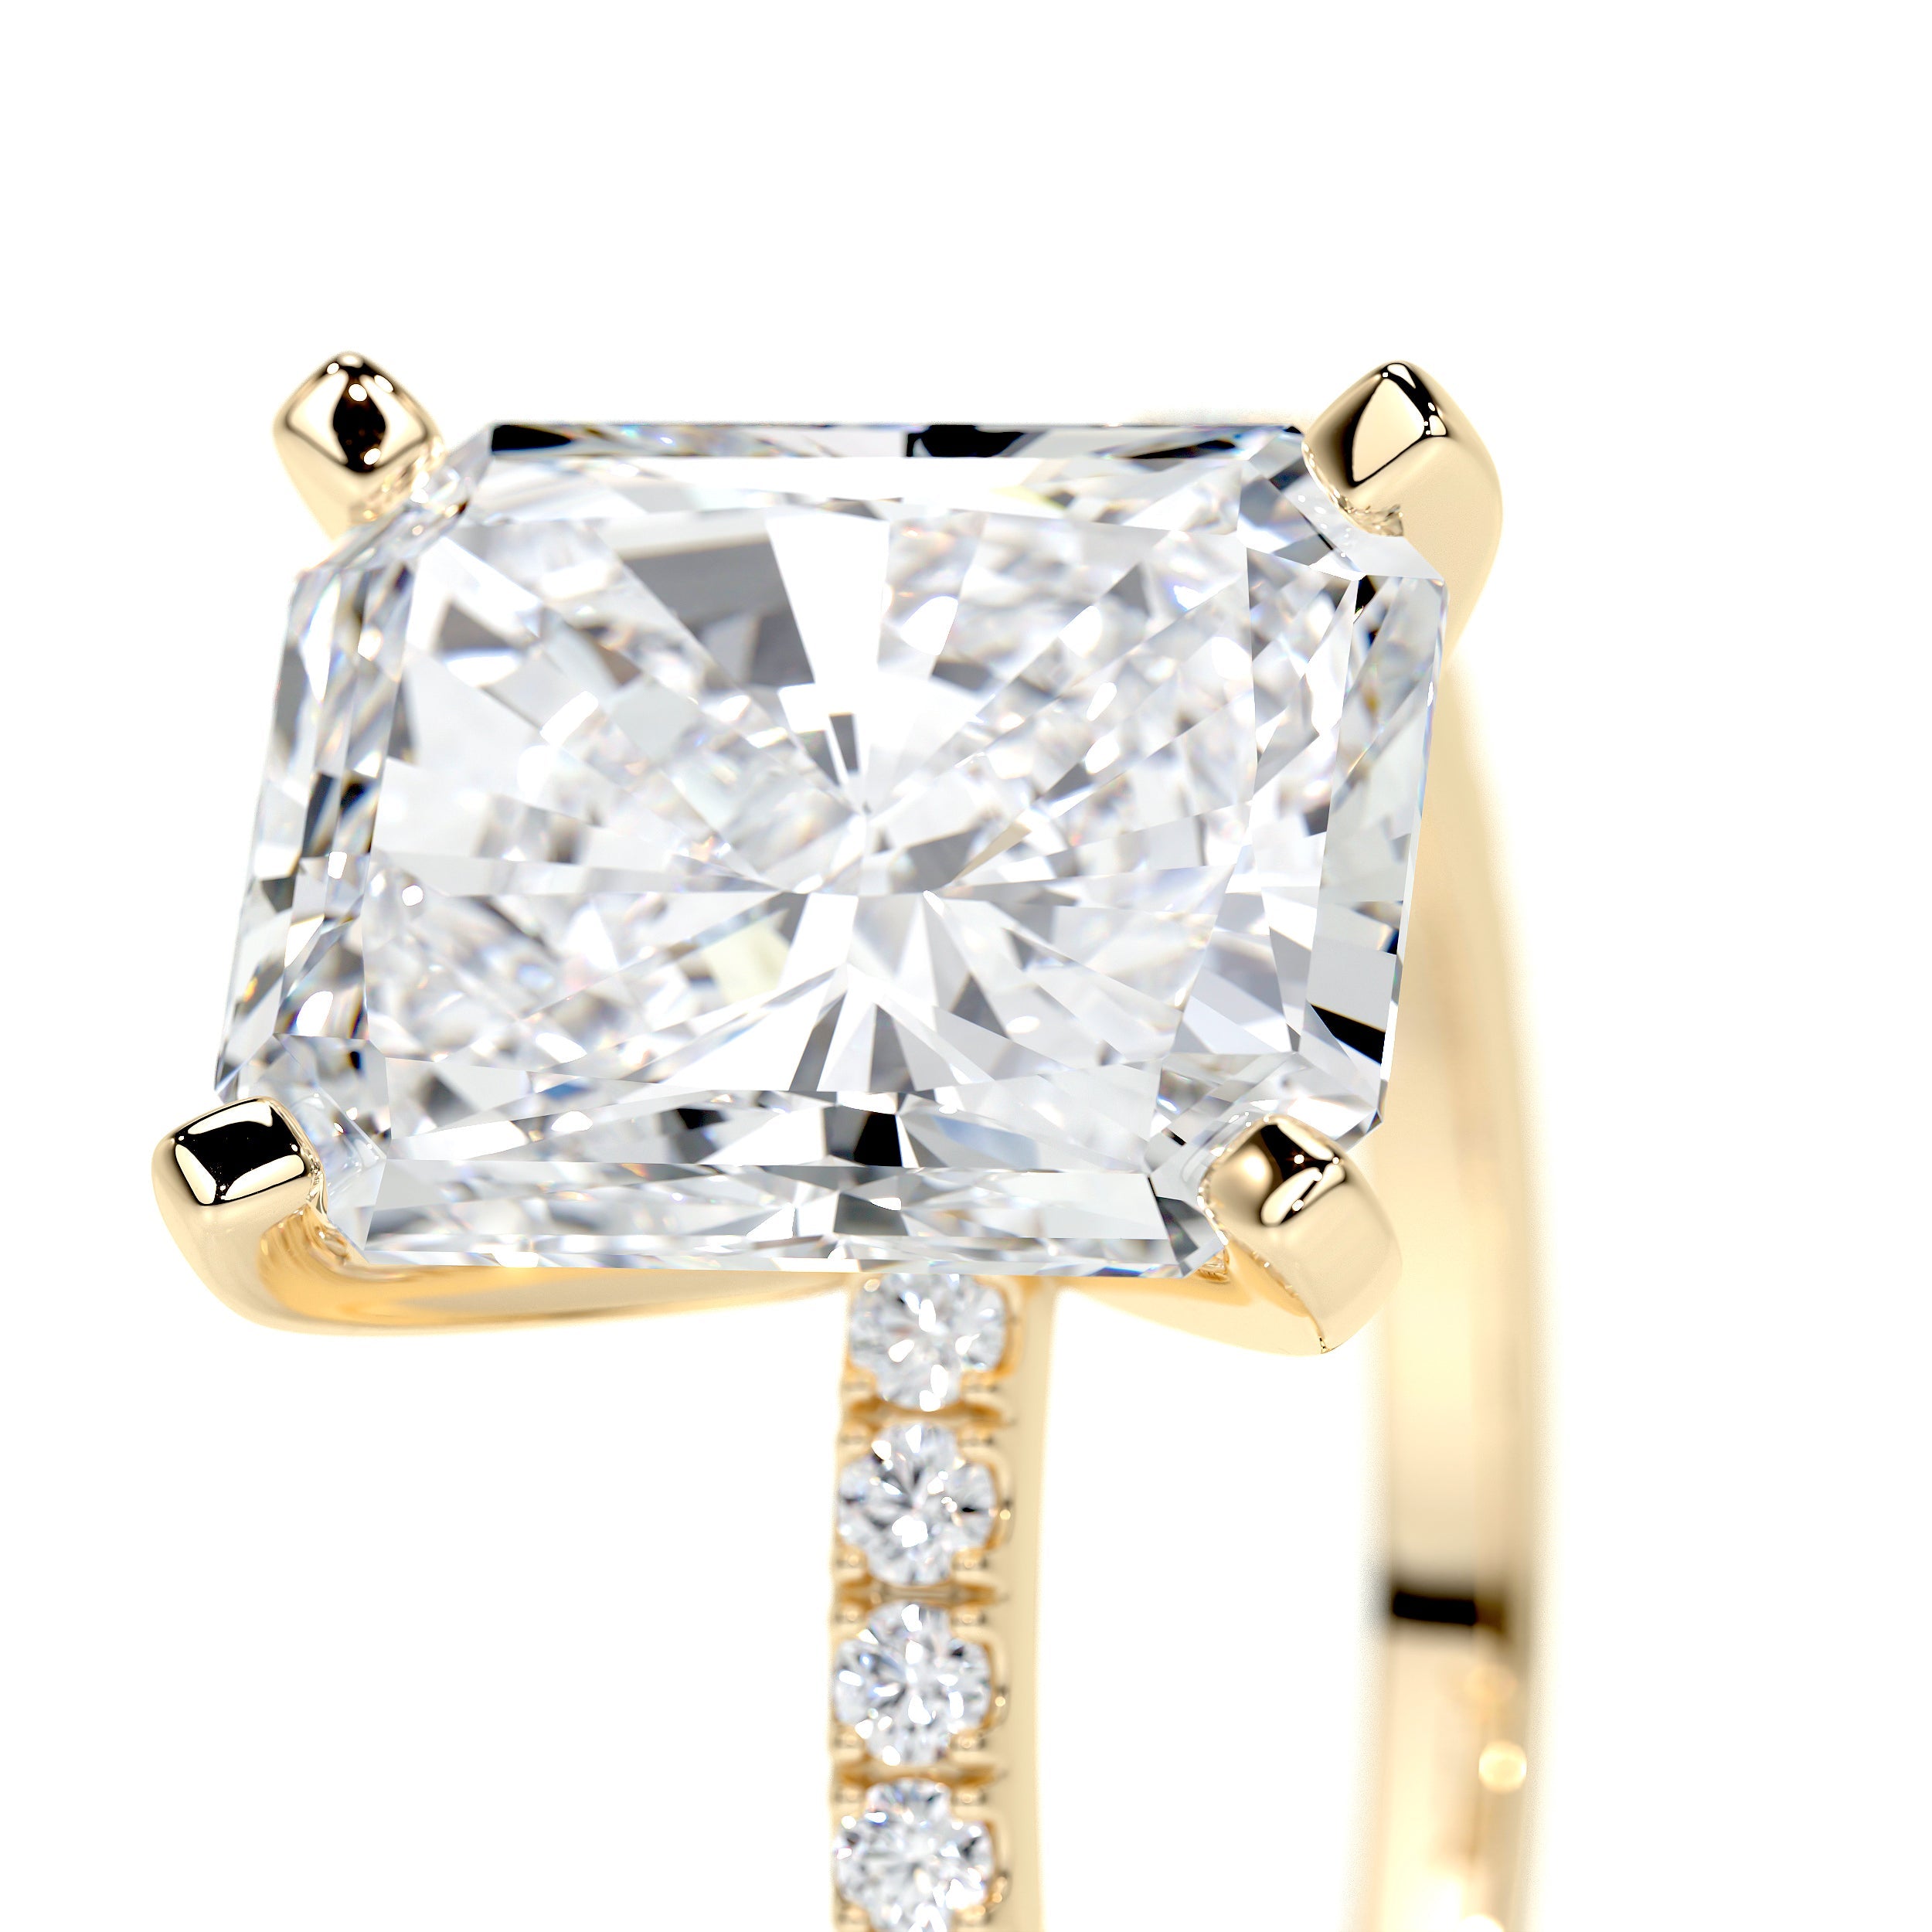 Audrey Lab Grown Diamond Ring   (3.5 Carat) -18K Yellow Gold